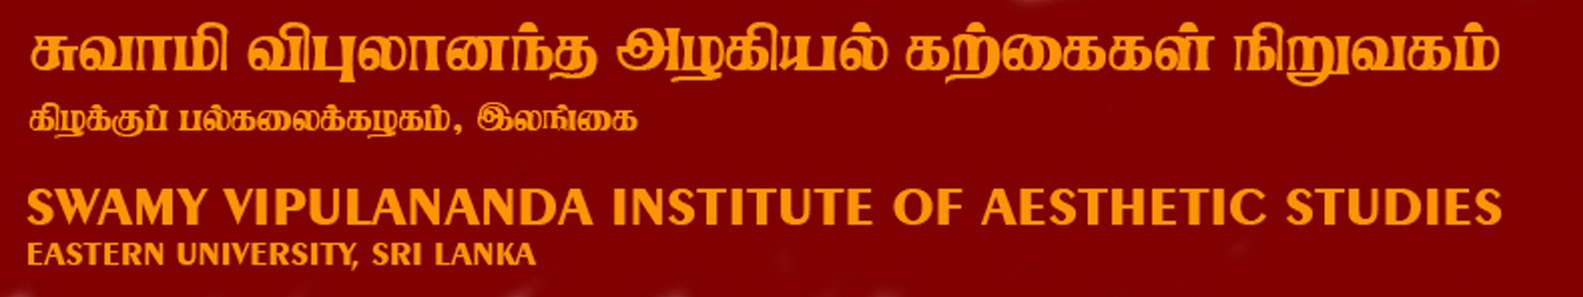 Swamy Vipulananda Institute of Aesthetic Studies, Eastern University Sri Lanka